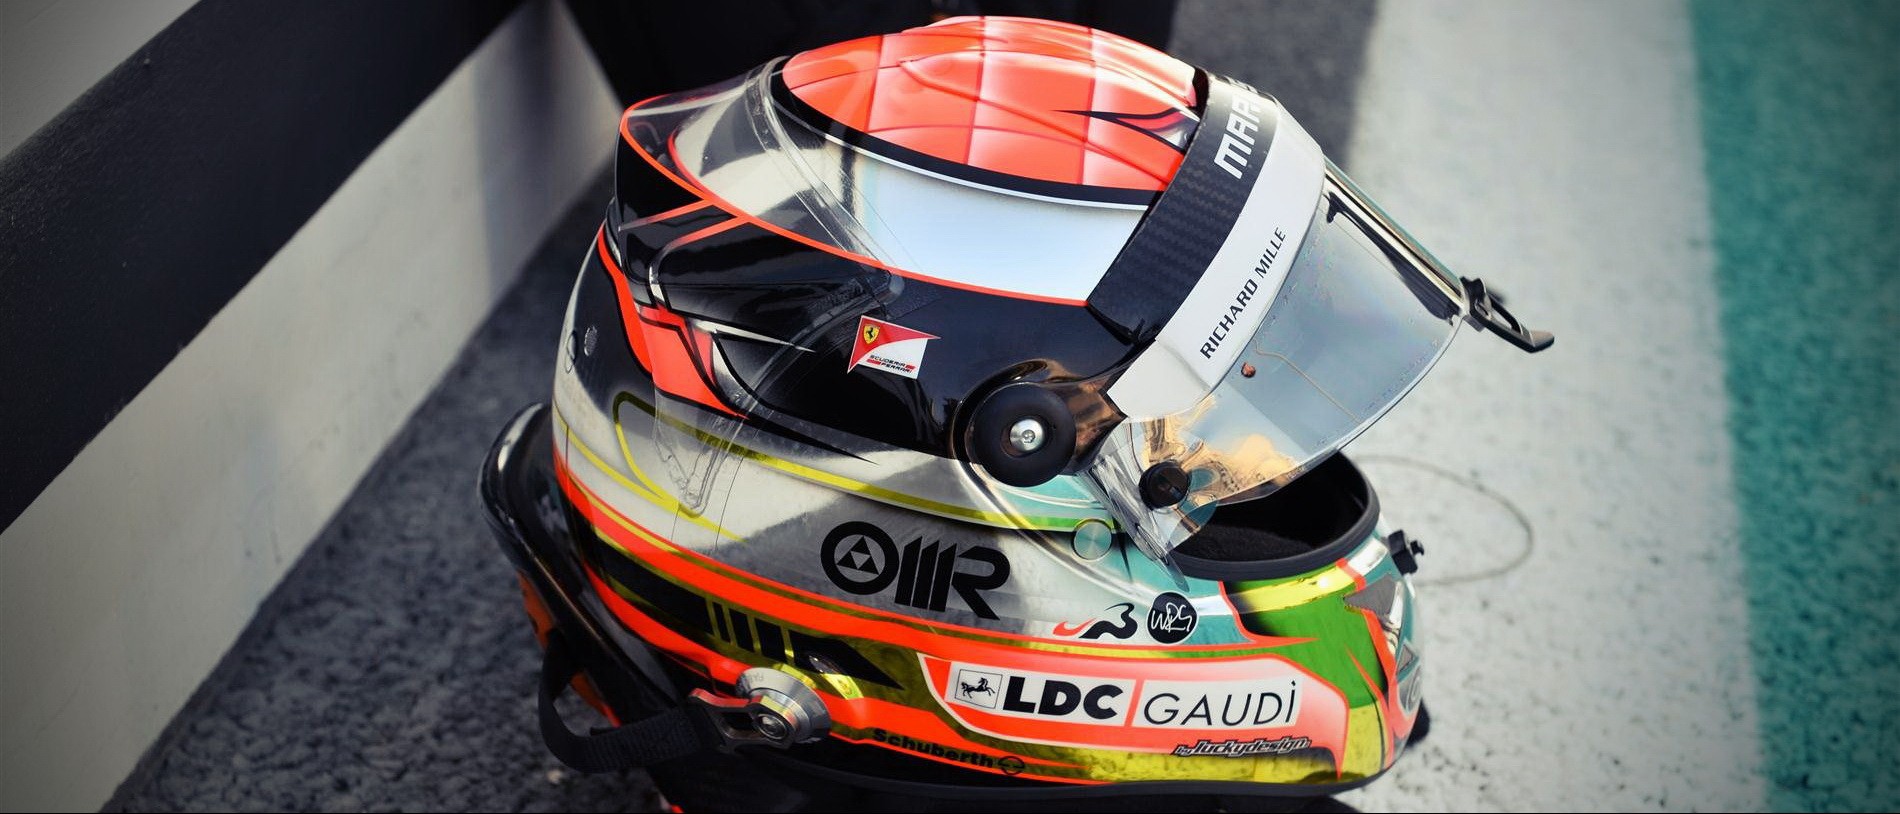 Шлем Жюля Бьянки на Гран-При Абу-Даби 2013 | 2013 Abu Dhabi Grand Prix helmet of Jules Bianchi